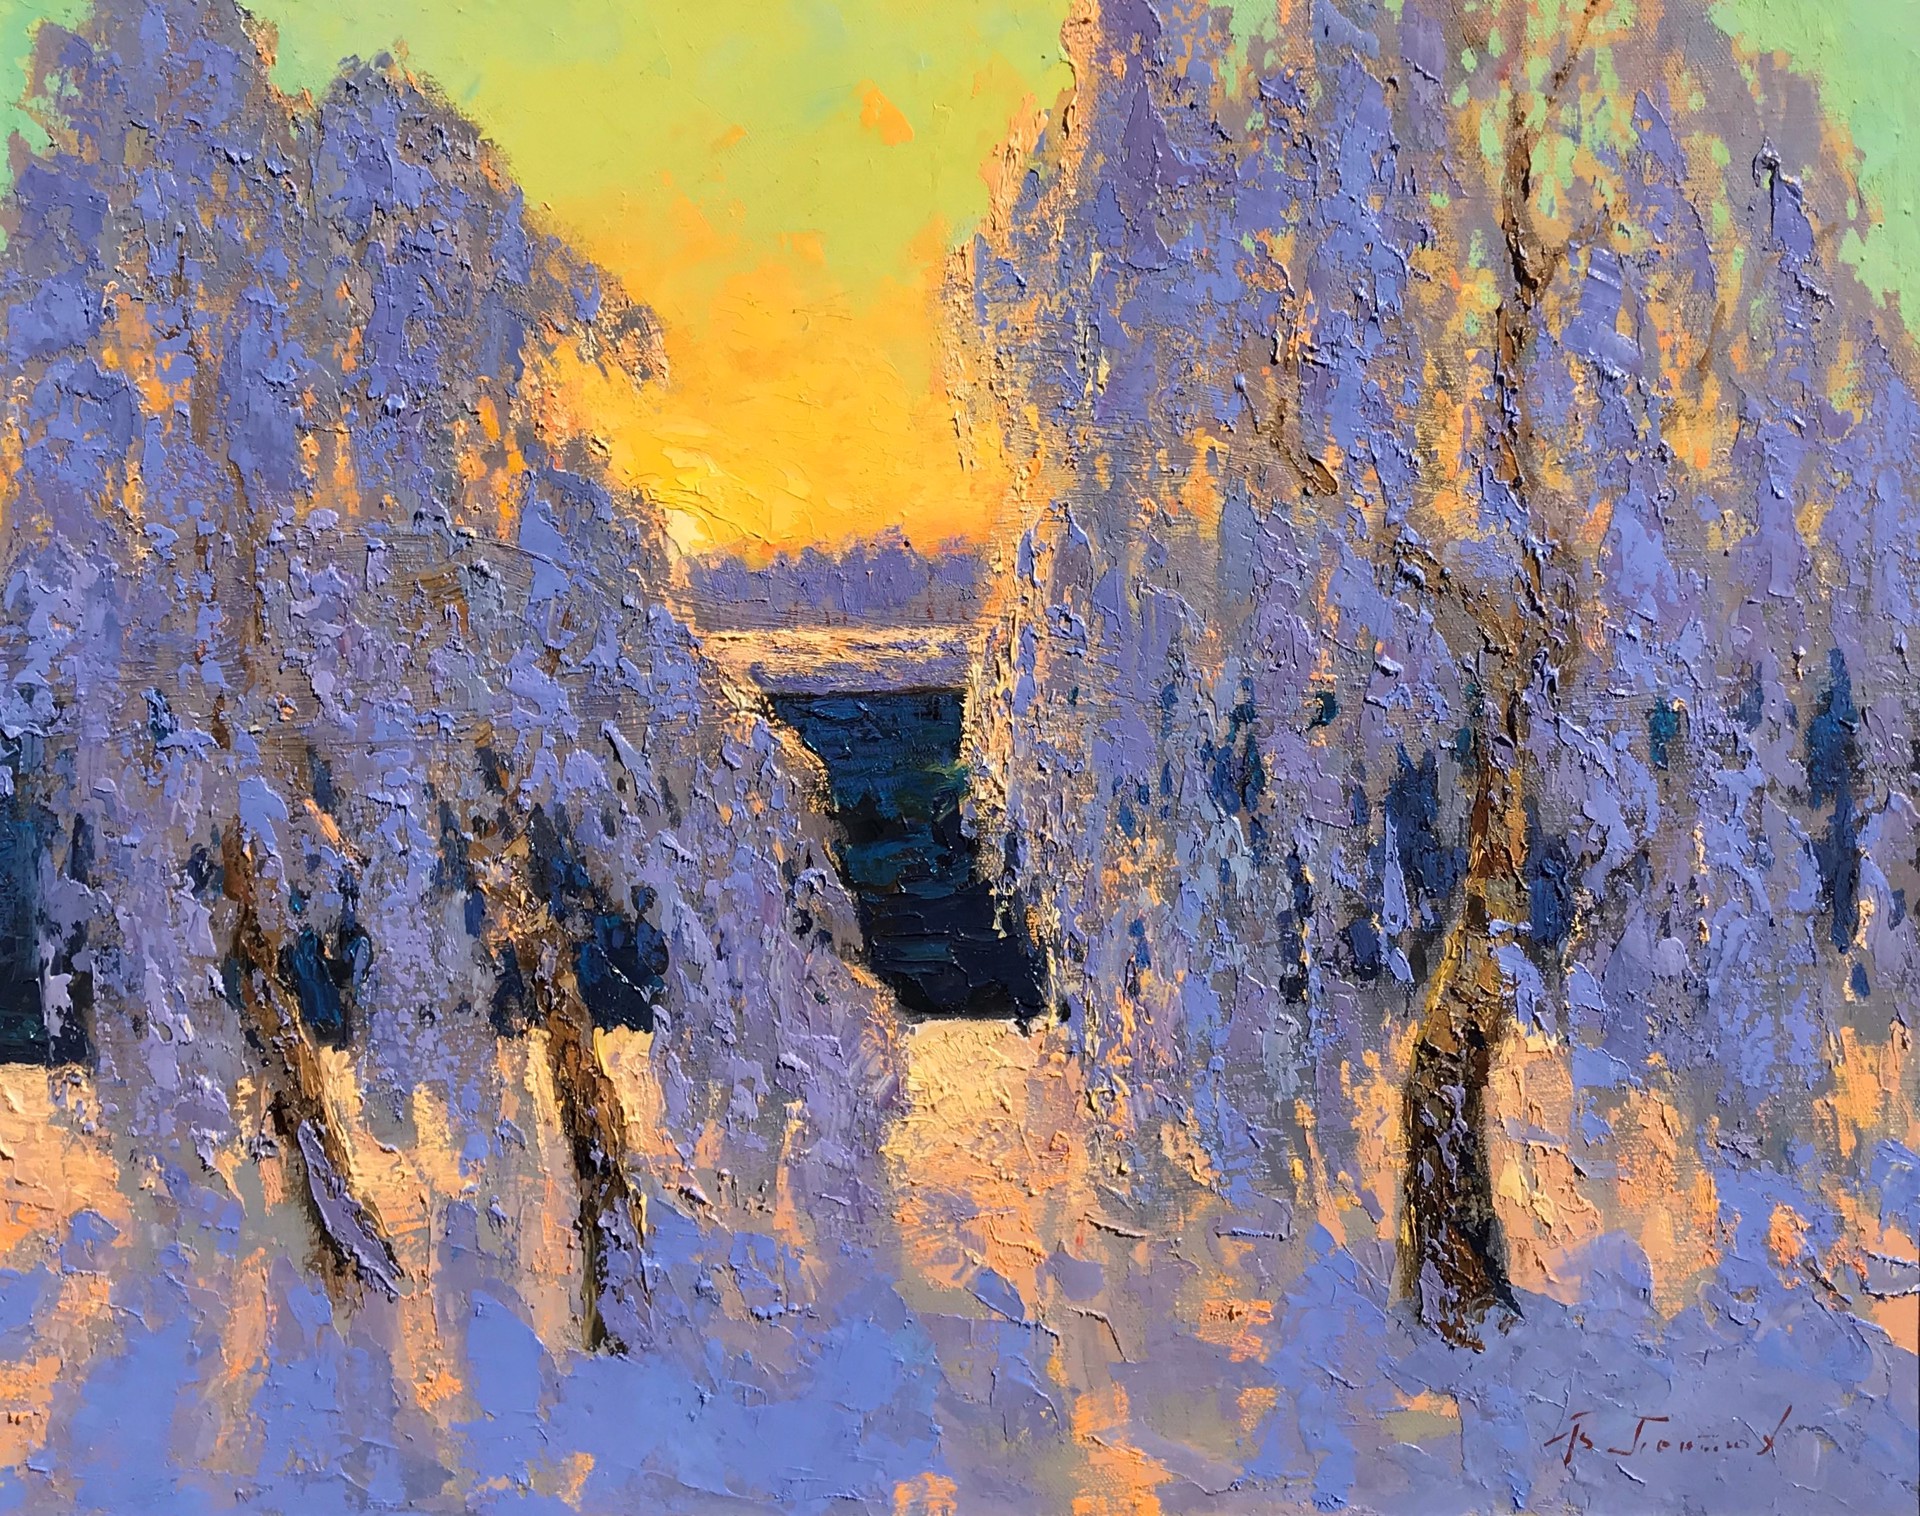 After Snowfall by Vladimir Pentjuh